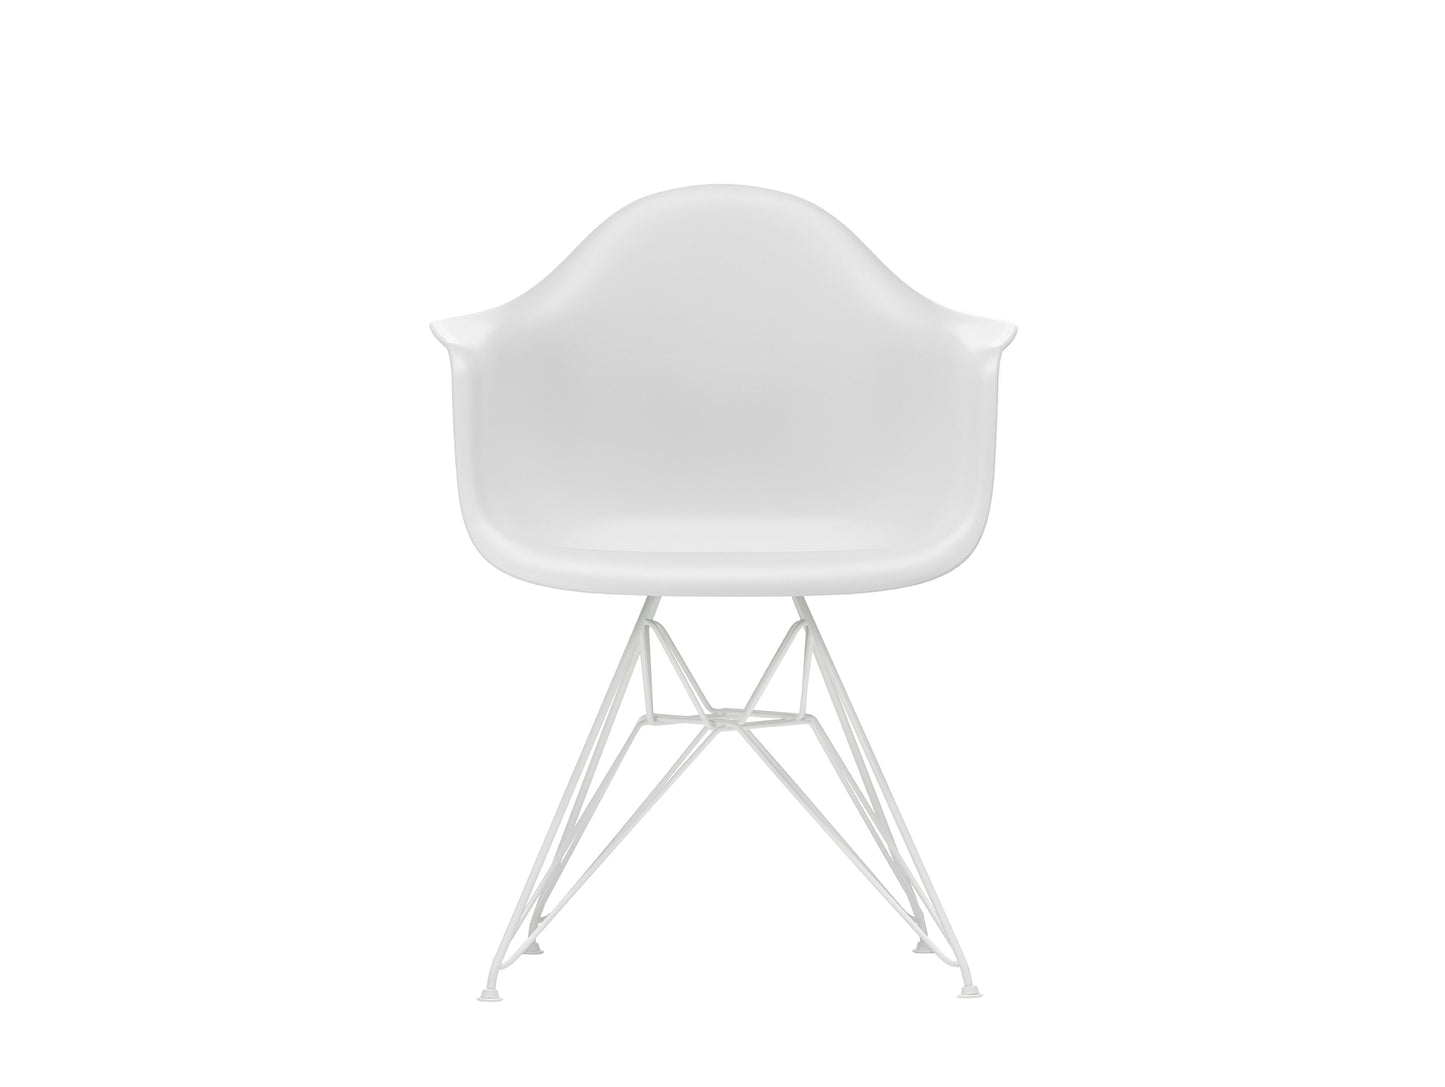 Eames DAR Plastic Armchair RE by Vitra - 85 Cotton White Shell / White Base